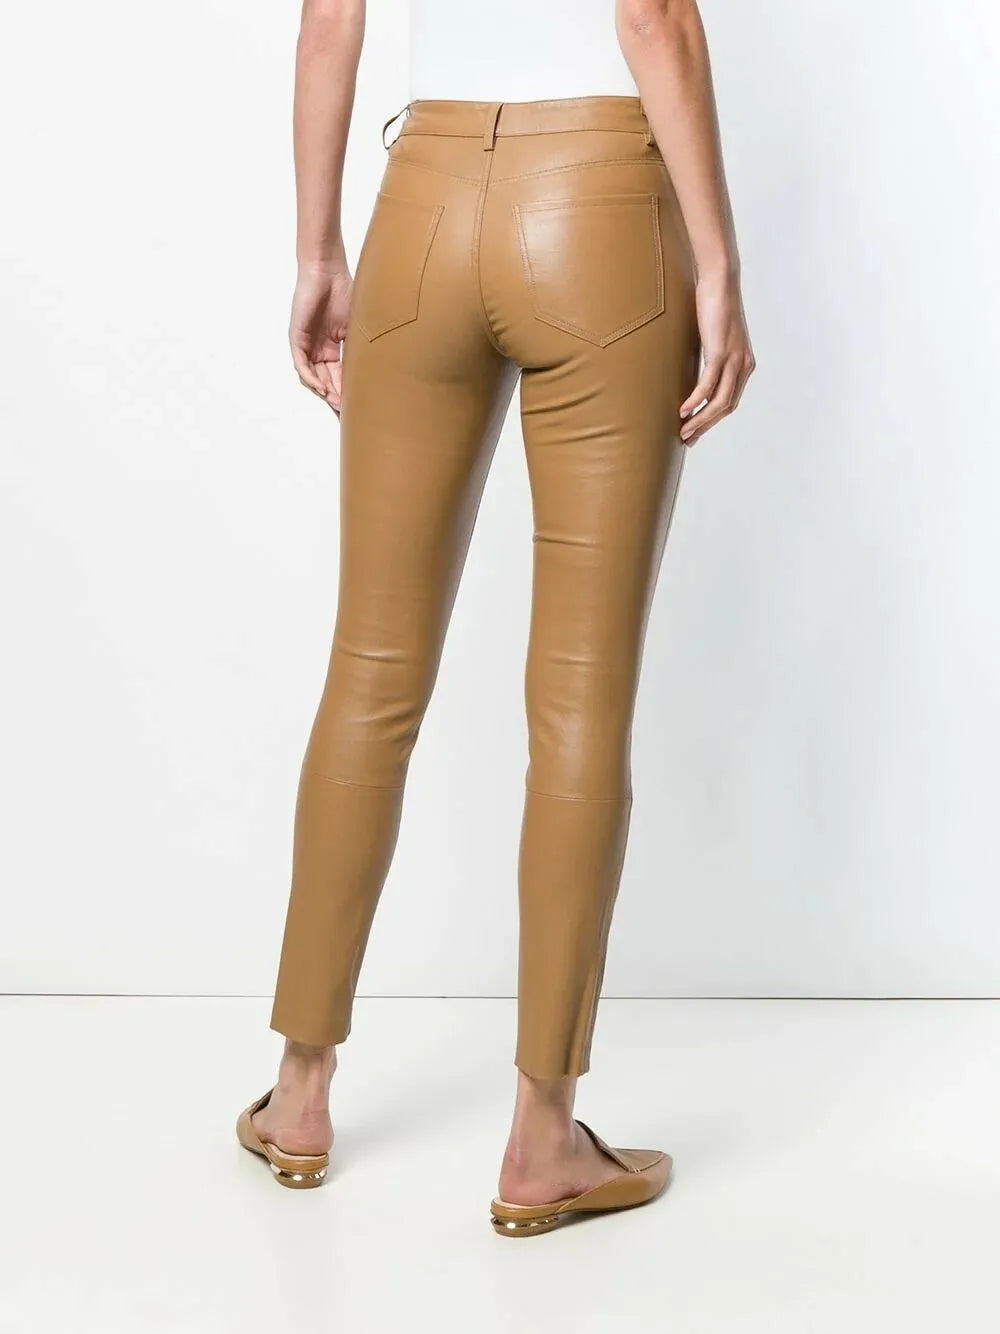 Leather Pant Long Waist High Women Trousers Skinny Size Beige Leggings Womens